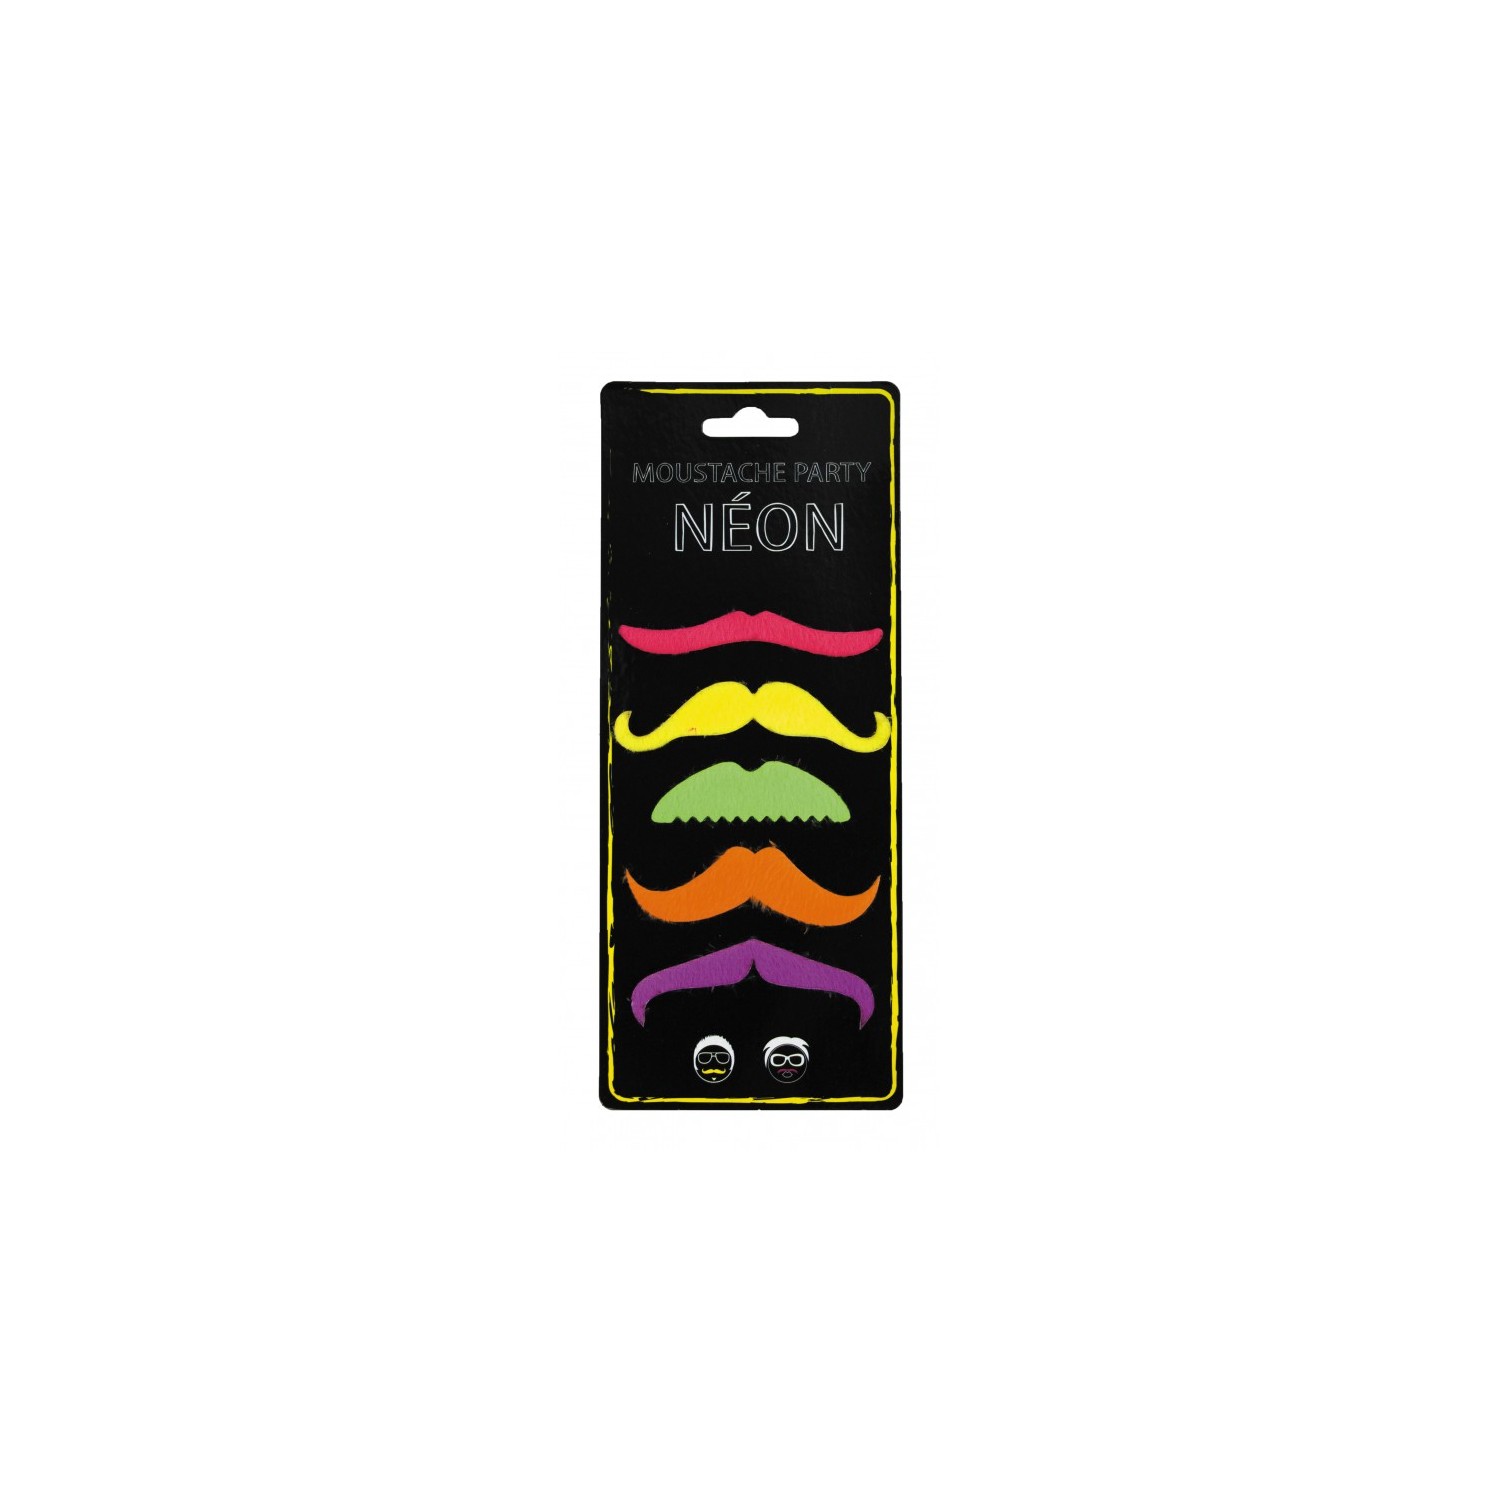 Moustaches party neon